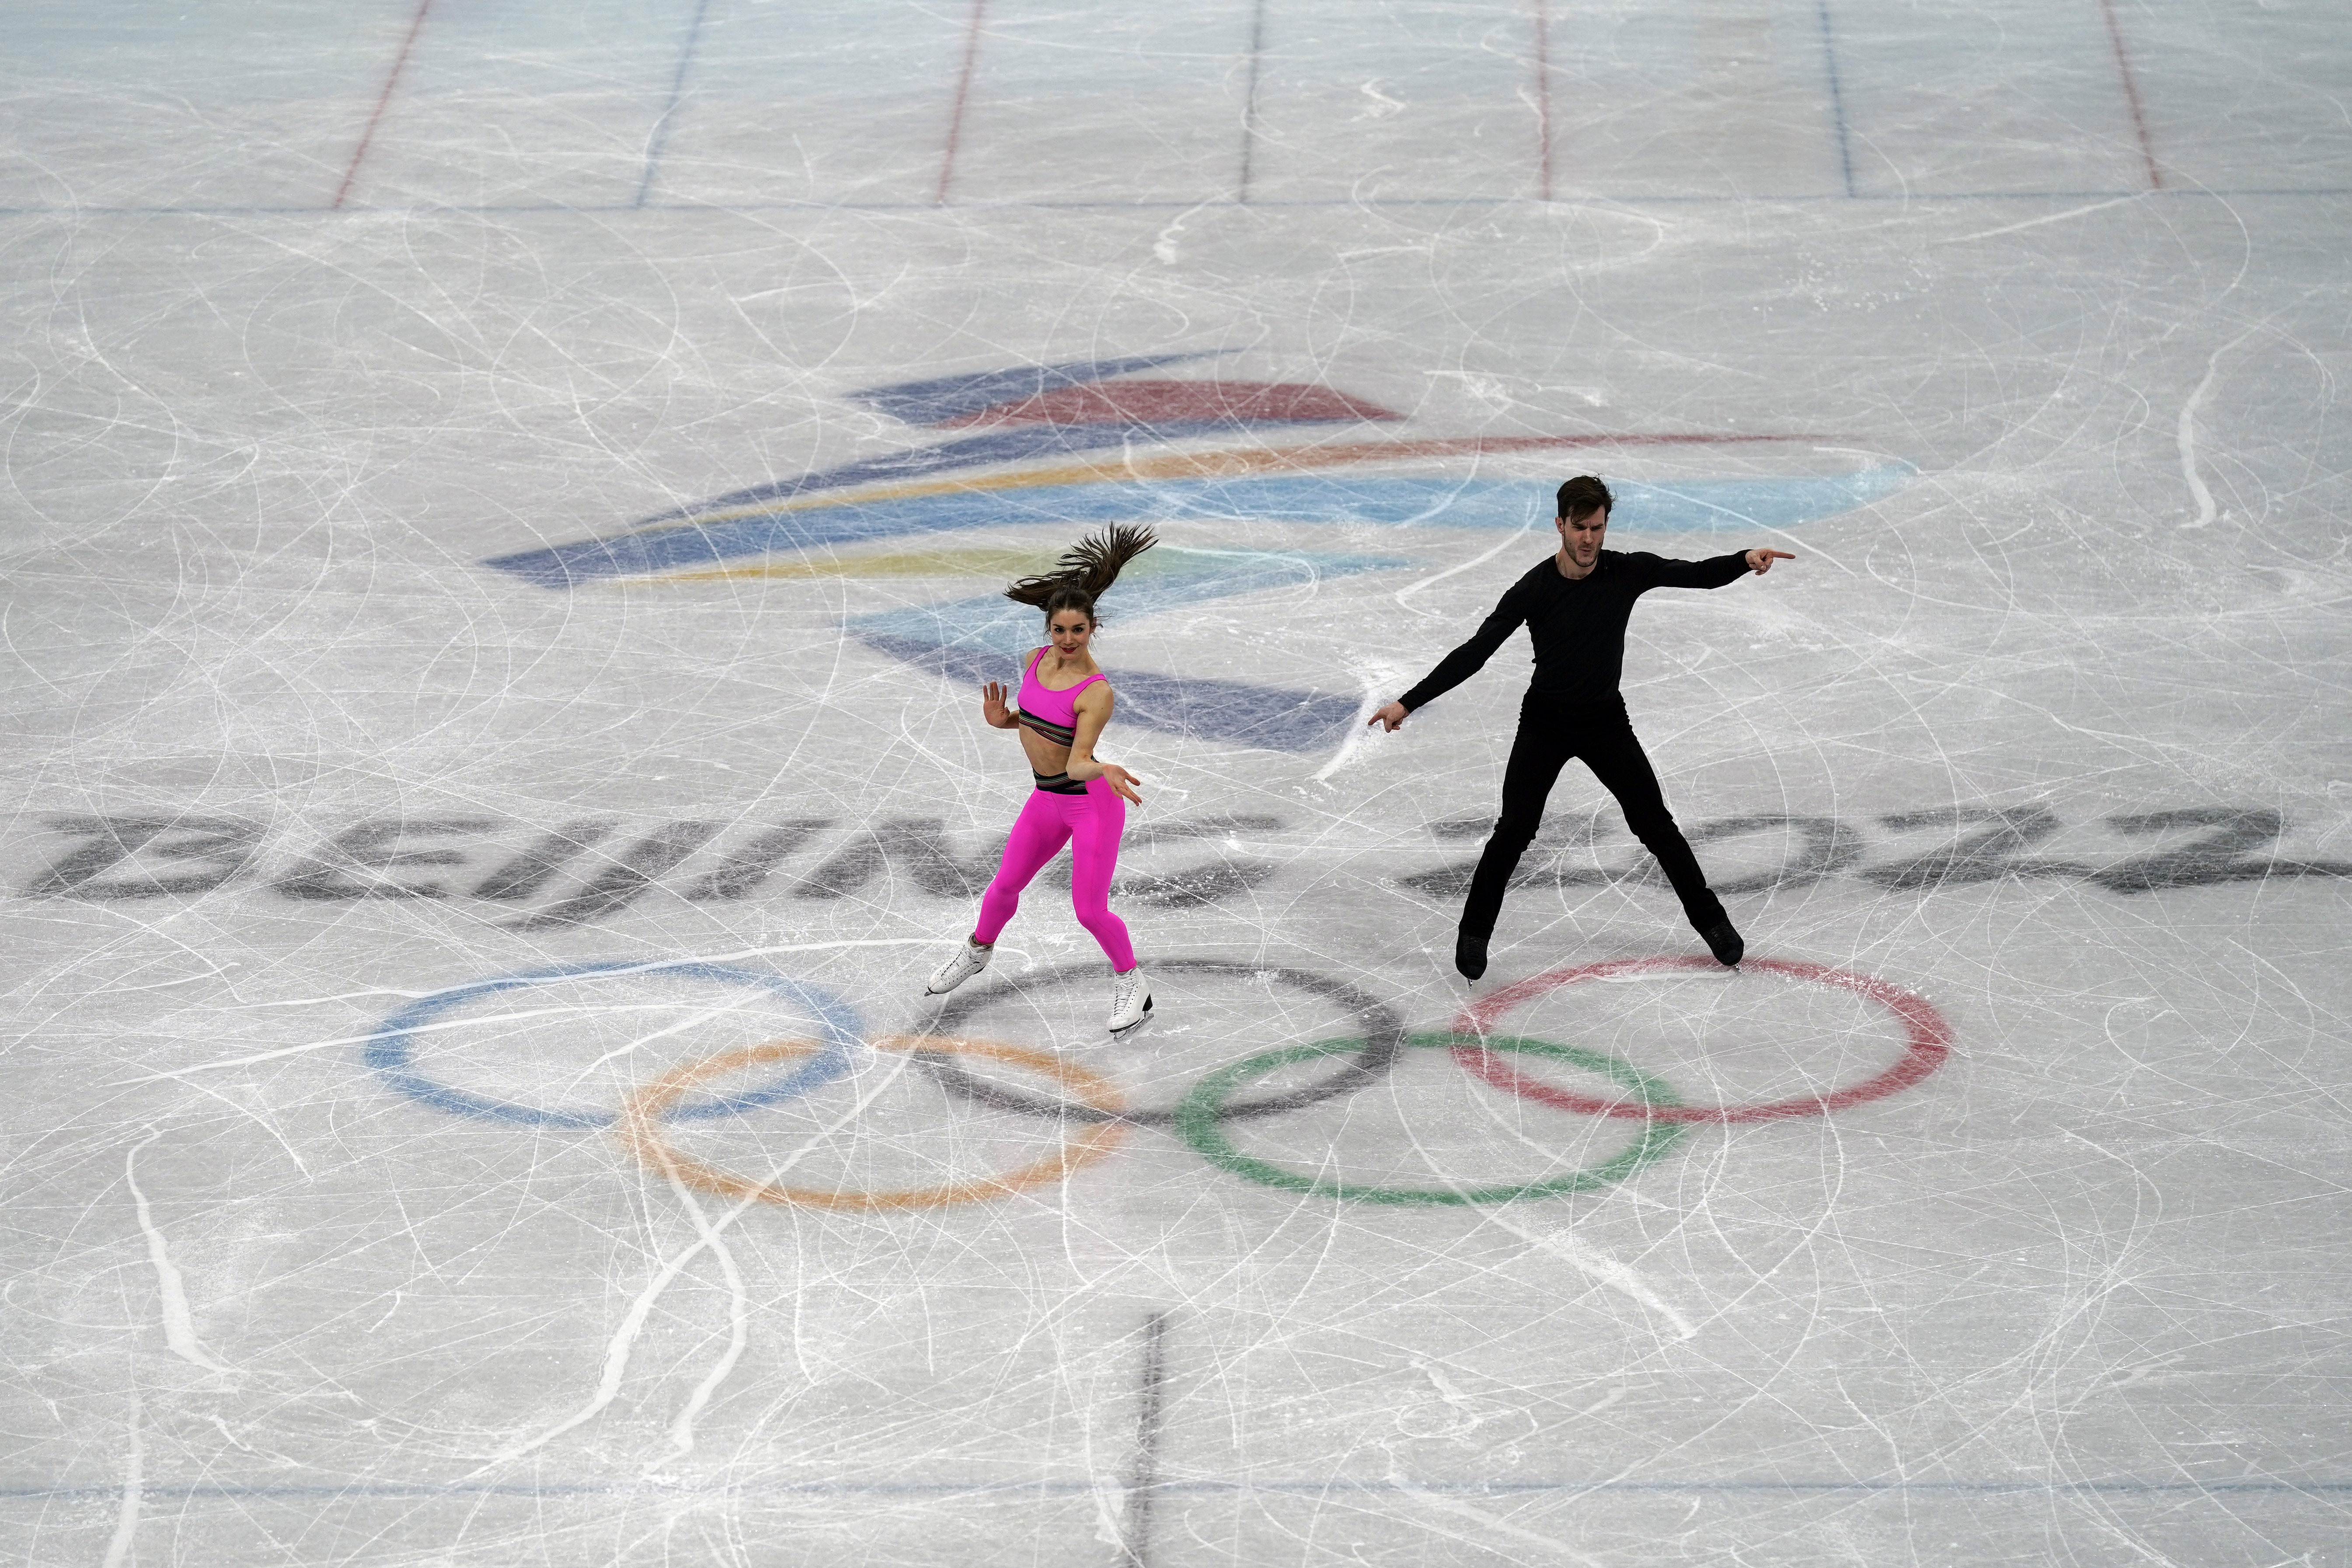 olympics figure skating livestream